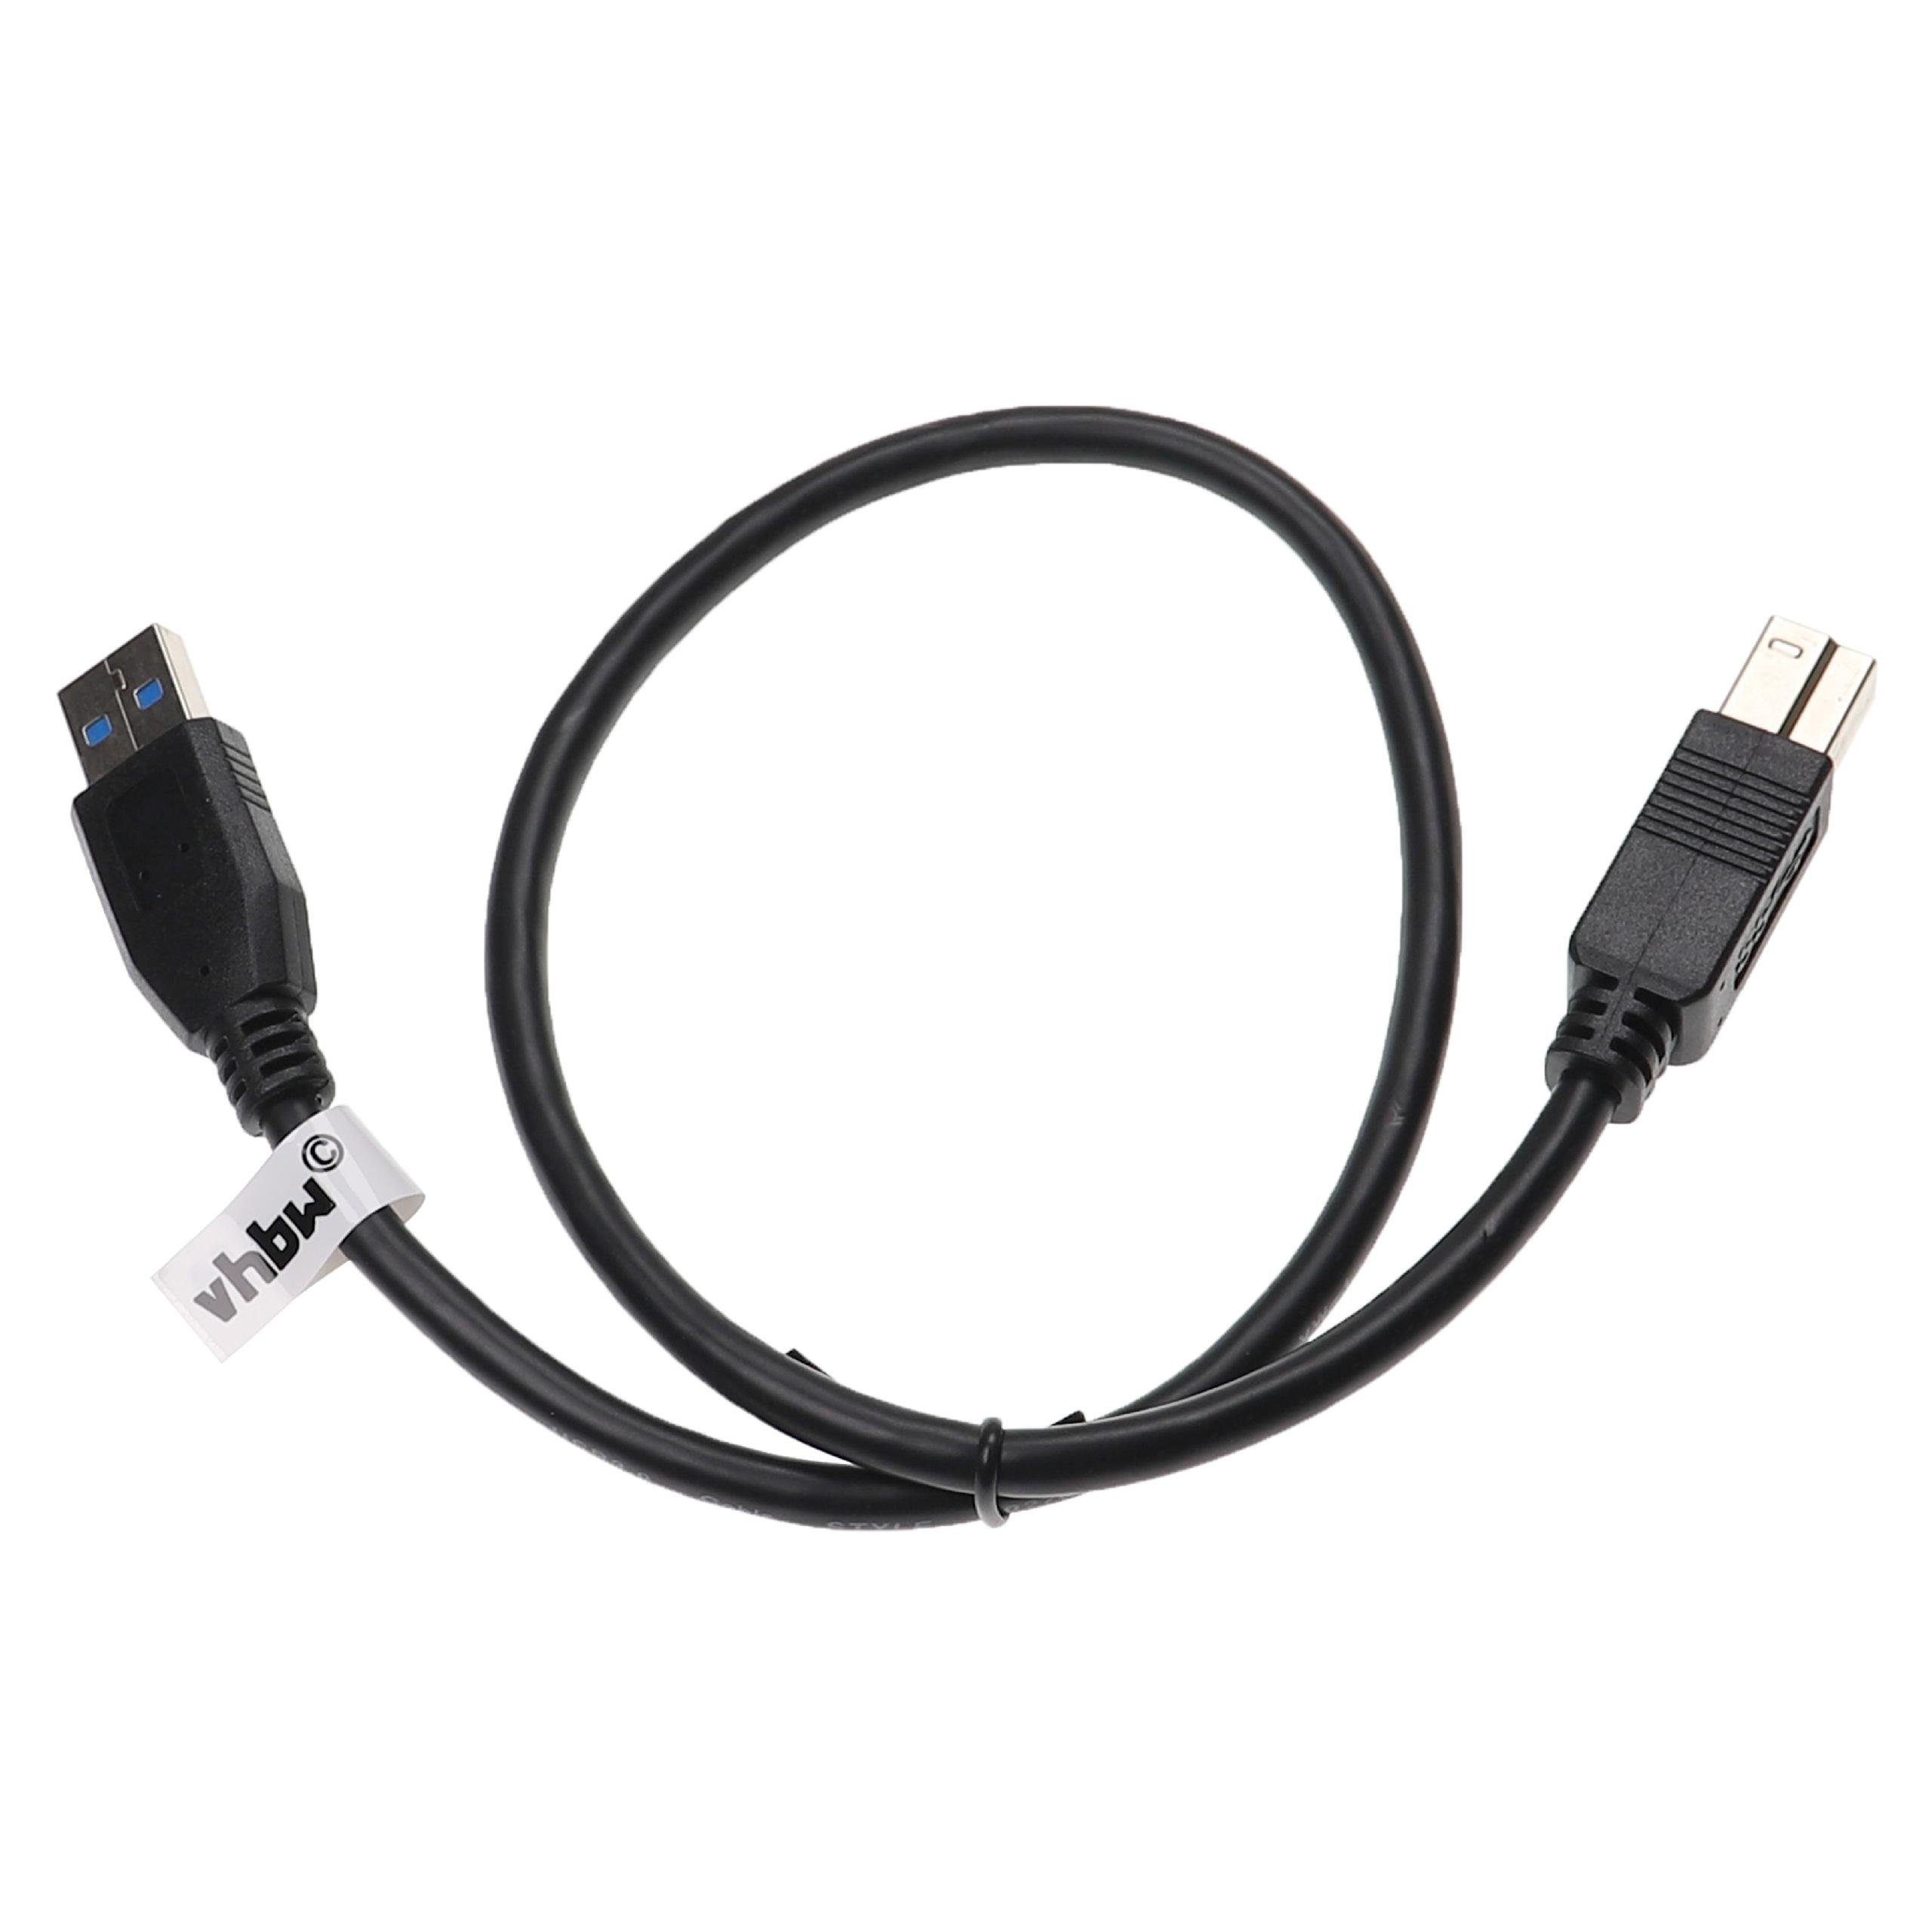 vhbw für Computer / Festplatte / Docking-Station / Scanner / Drucker & USB- Kabel